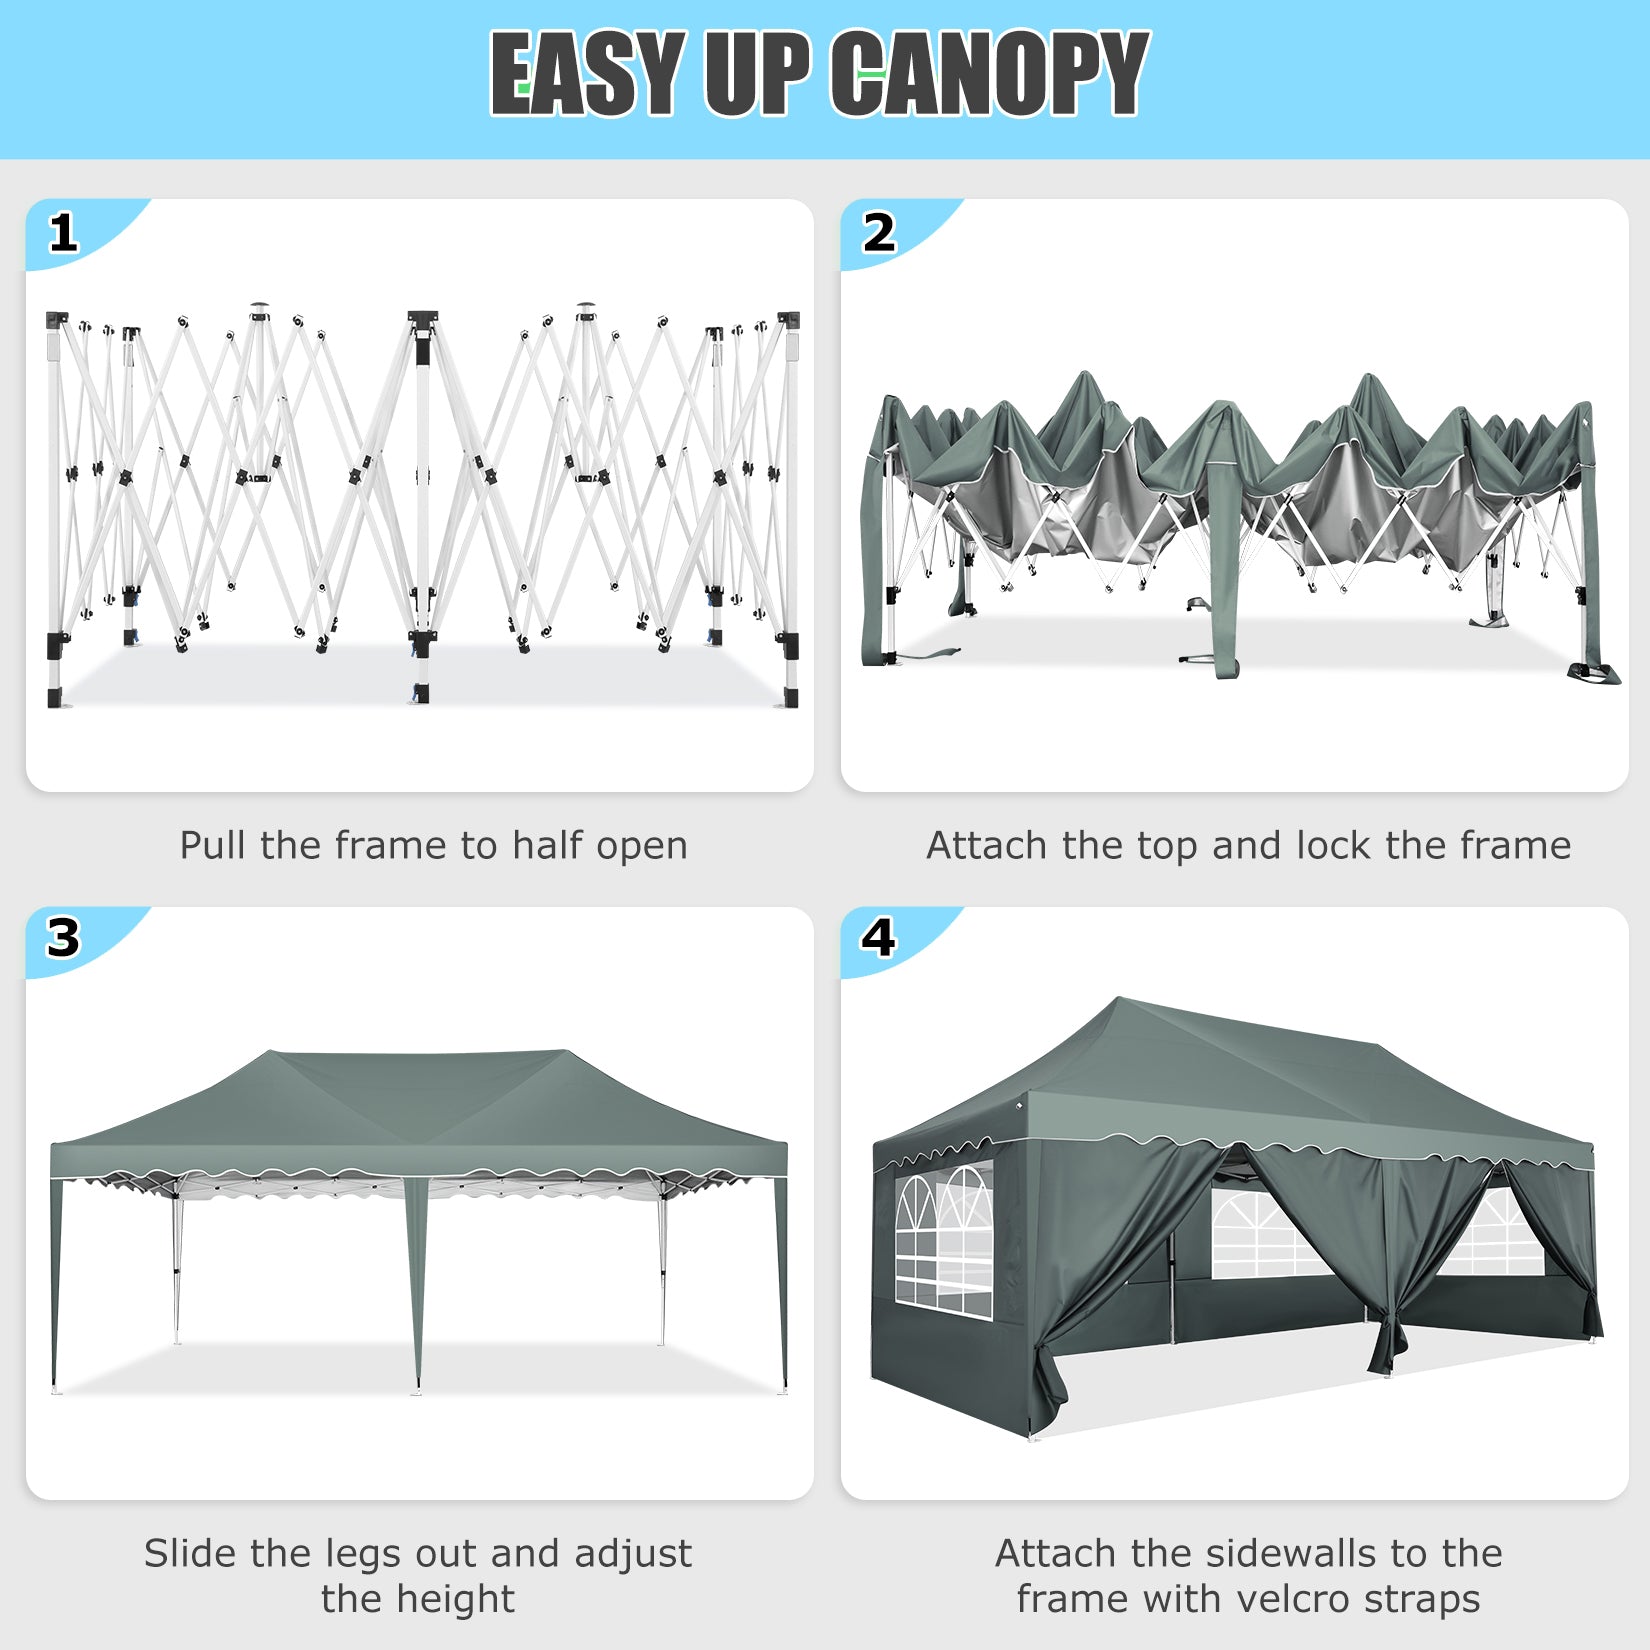 YUEBO Canopy 10' x 20' Pop Up Canopy Tent Heavy Duty Waterproof Adjust –  COBIZI